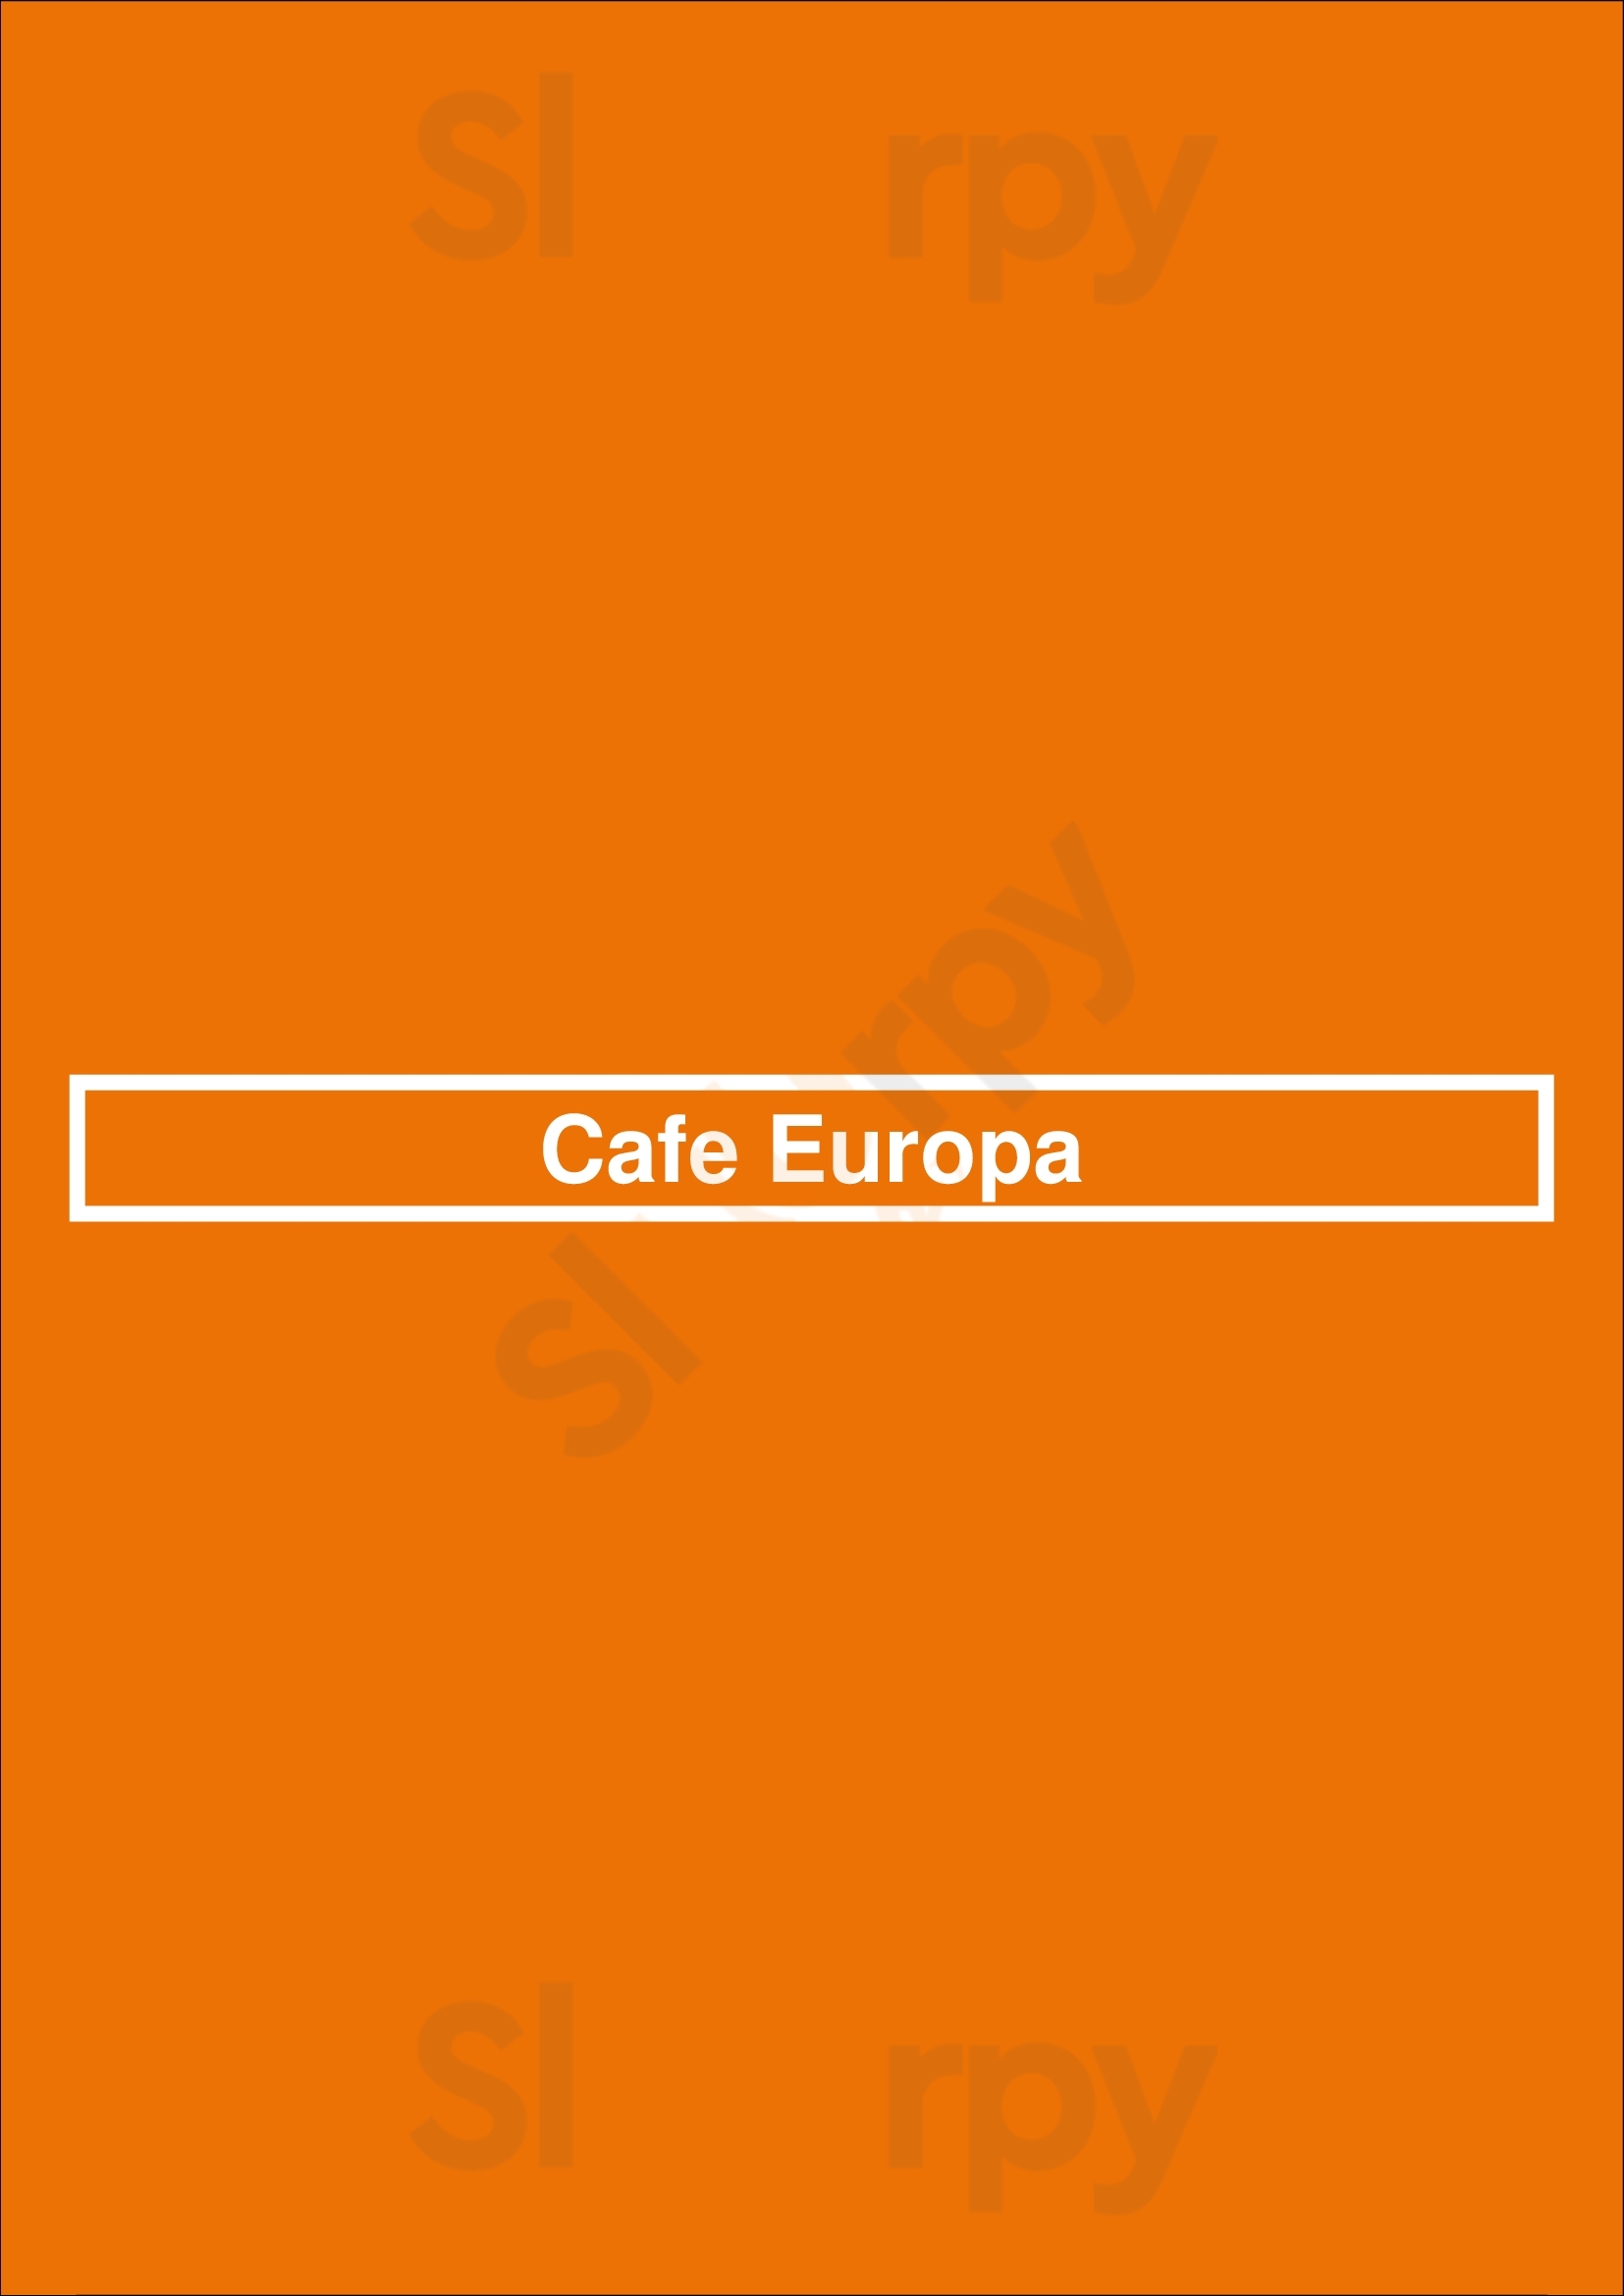 Cafe Europa Madrid Menu - 1